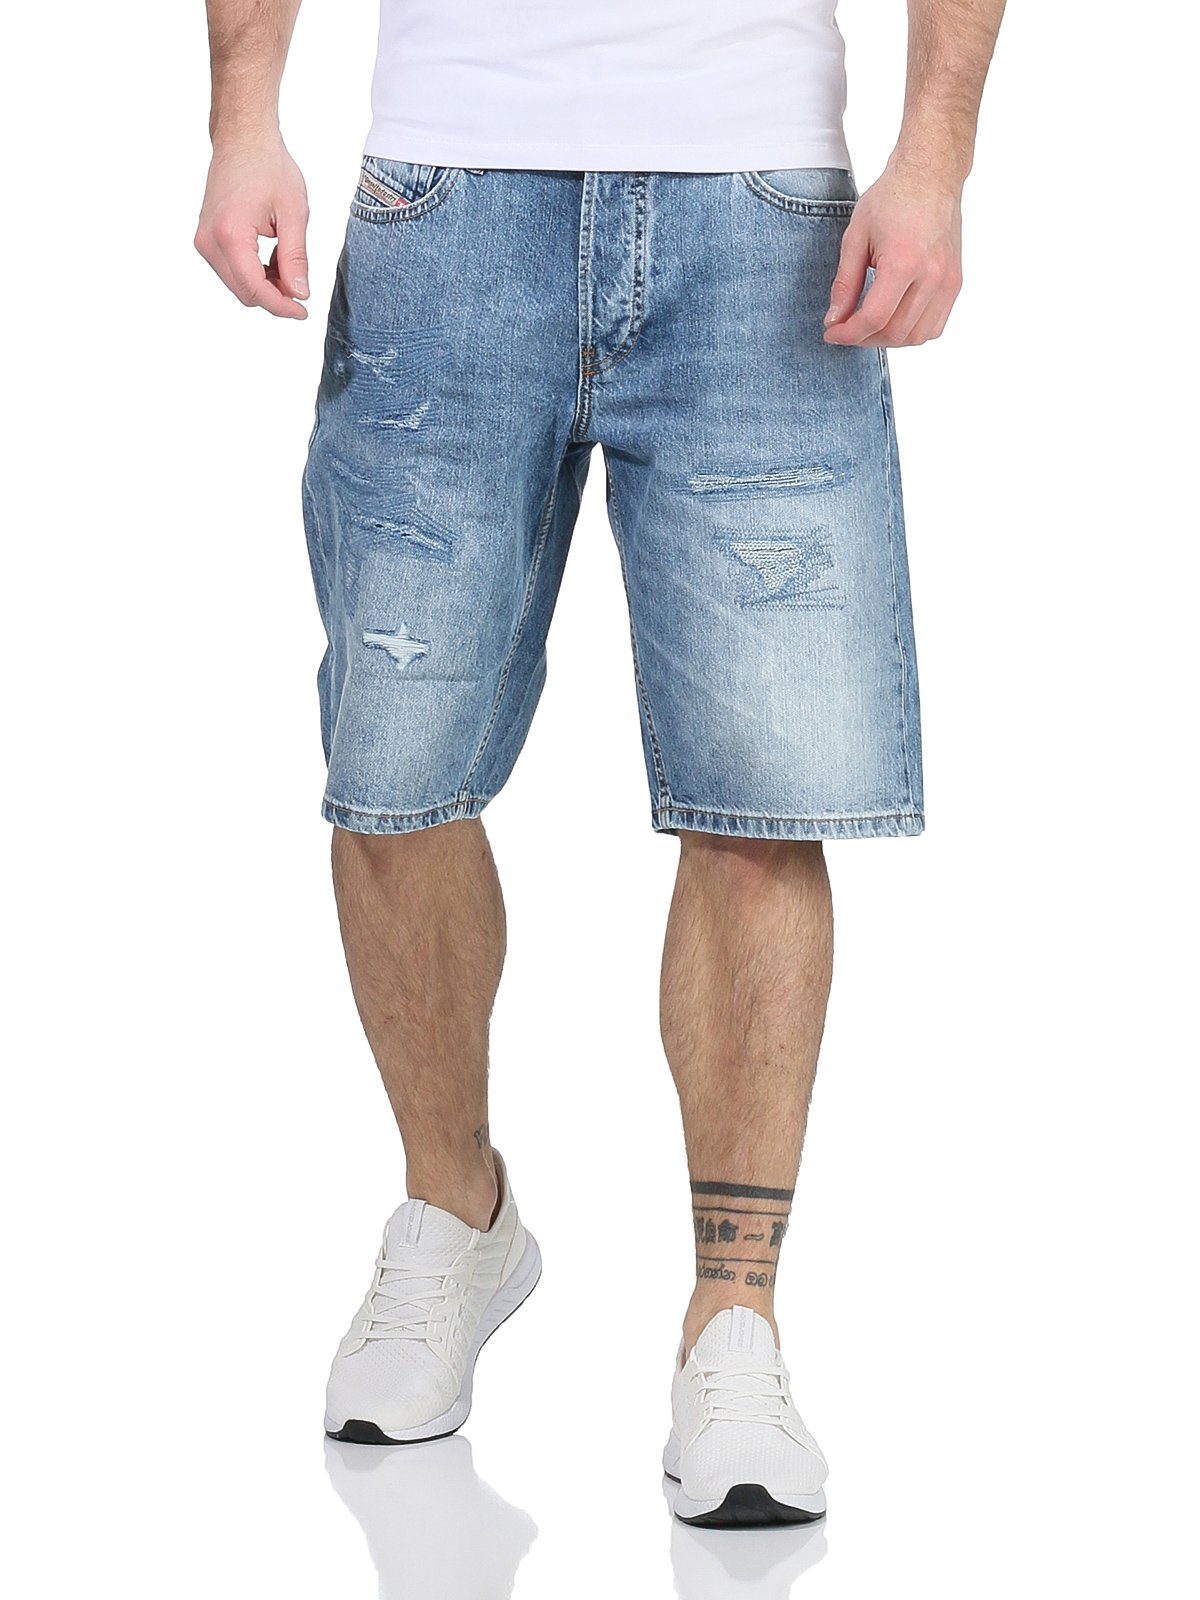 RG48R RB012 Look Jeansshorts Shorts Blau Herren Used-Look Diesel Shorts, Vintage Jeans Hose Kroshort kurze dezenter